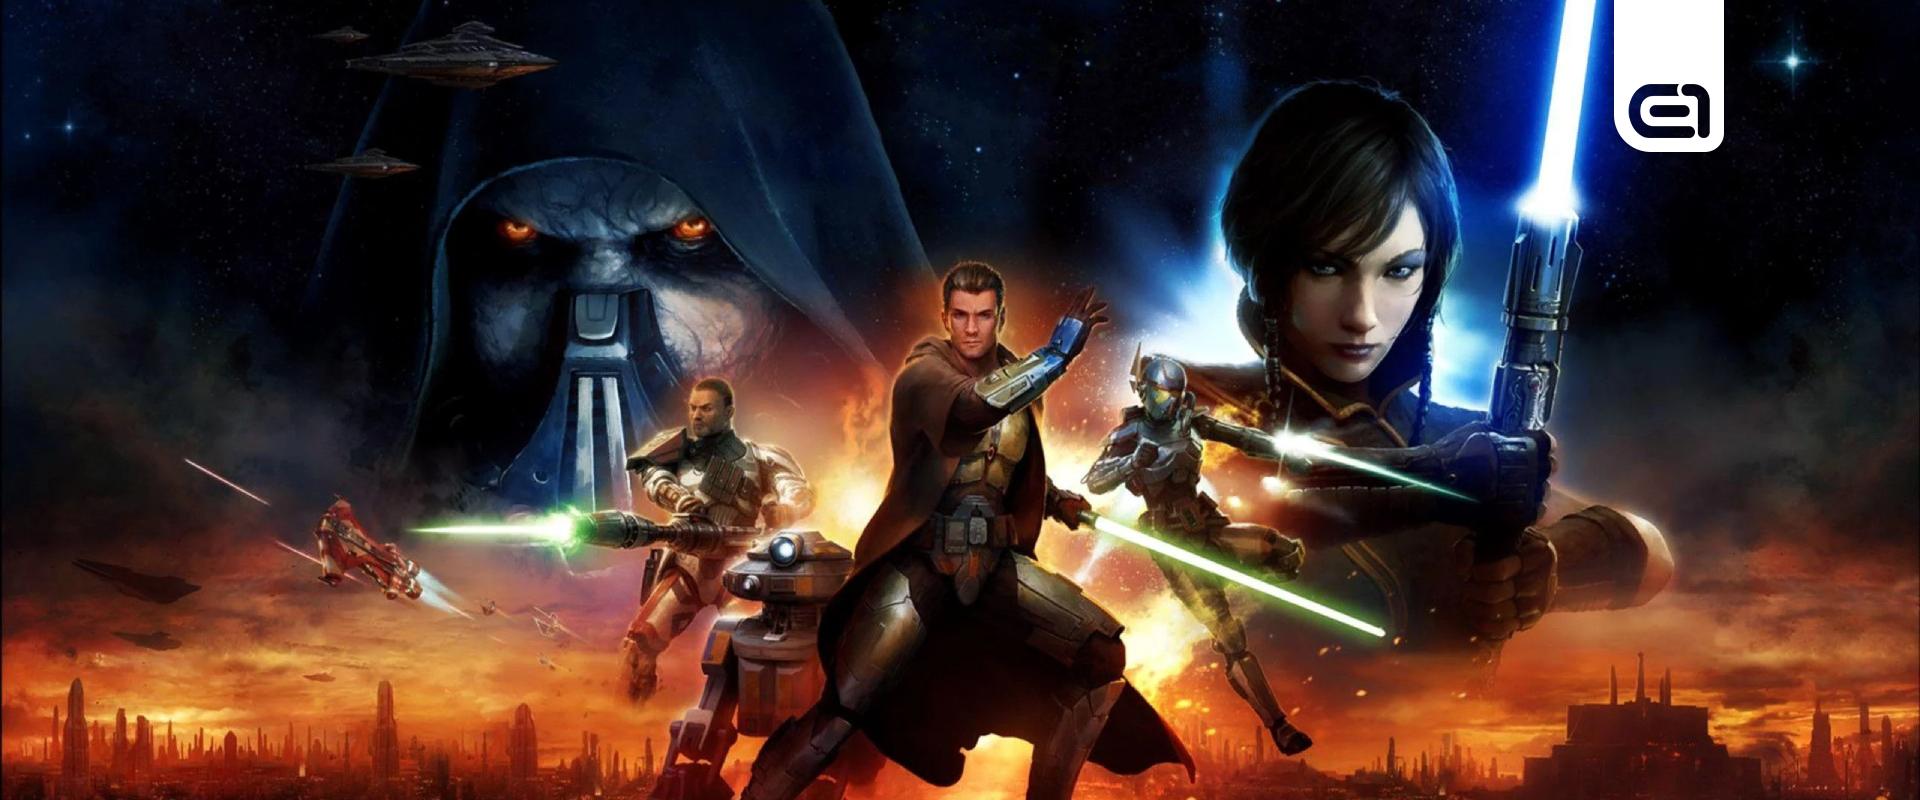 Nagy bajban a Star Wars: Knights of the Old Republic remake, megjelenik valaha?